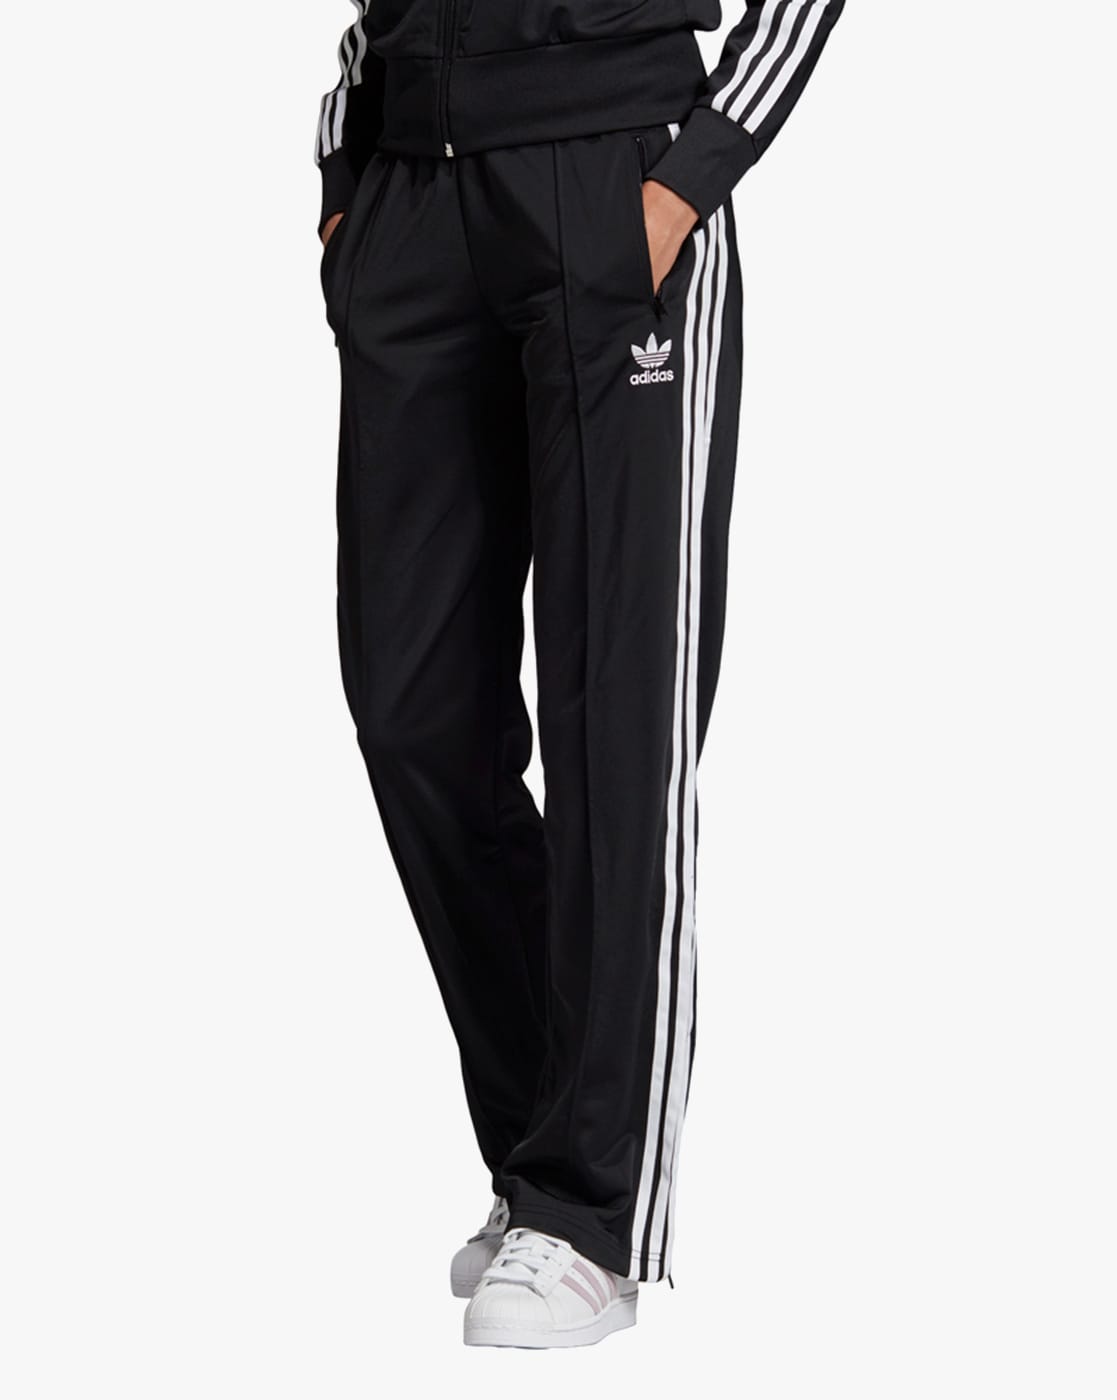 Buy Black Track Pants For Women By Adidas Originals Online Ajio Com